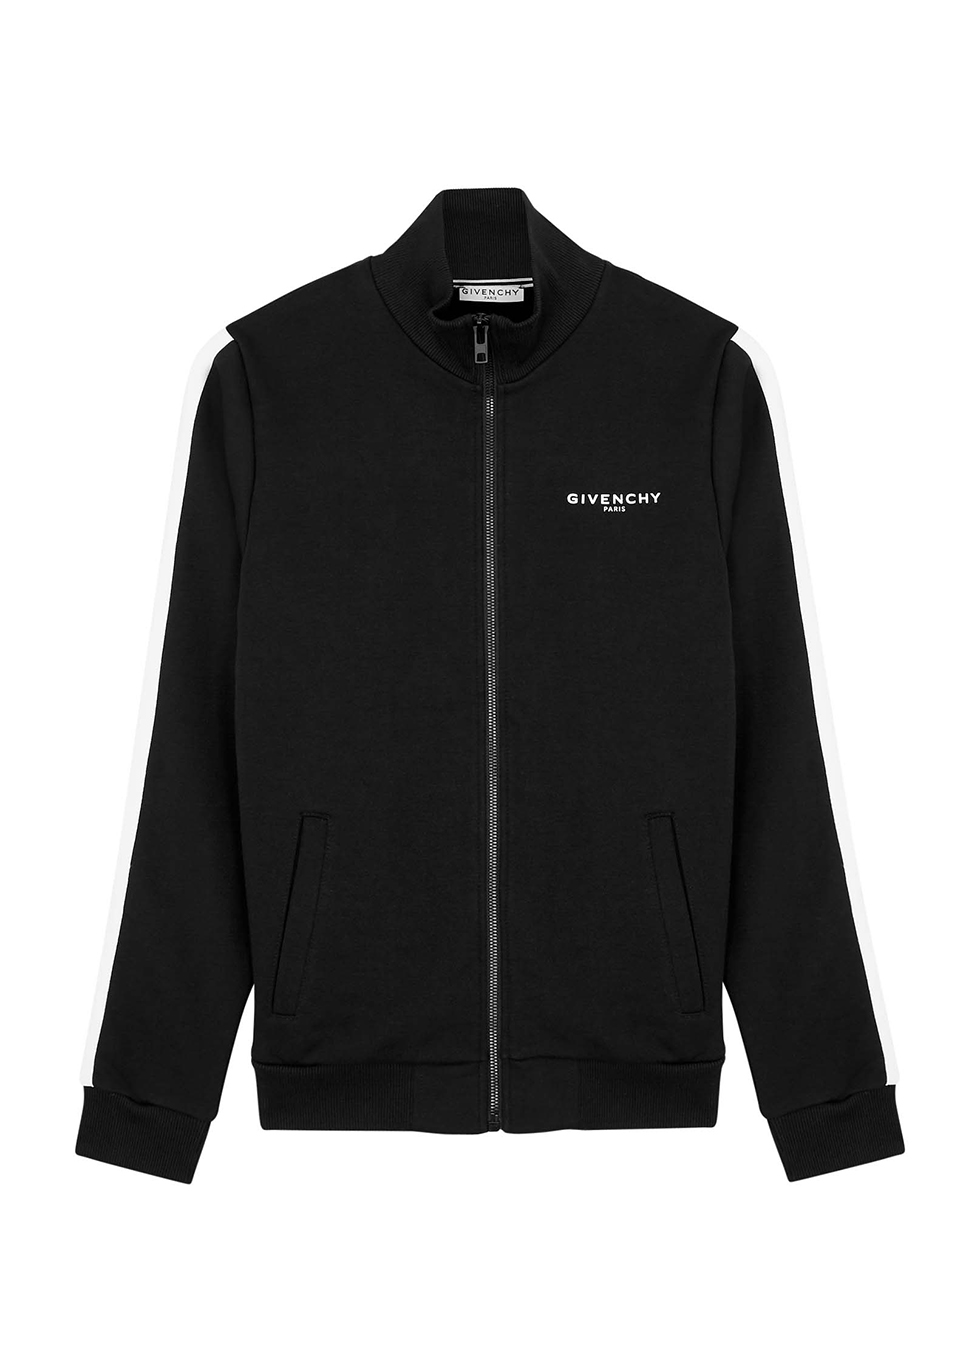 Givenchy Black logo jersey track jacket (14 years) - Harvey Nichols